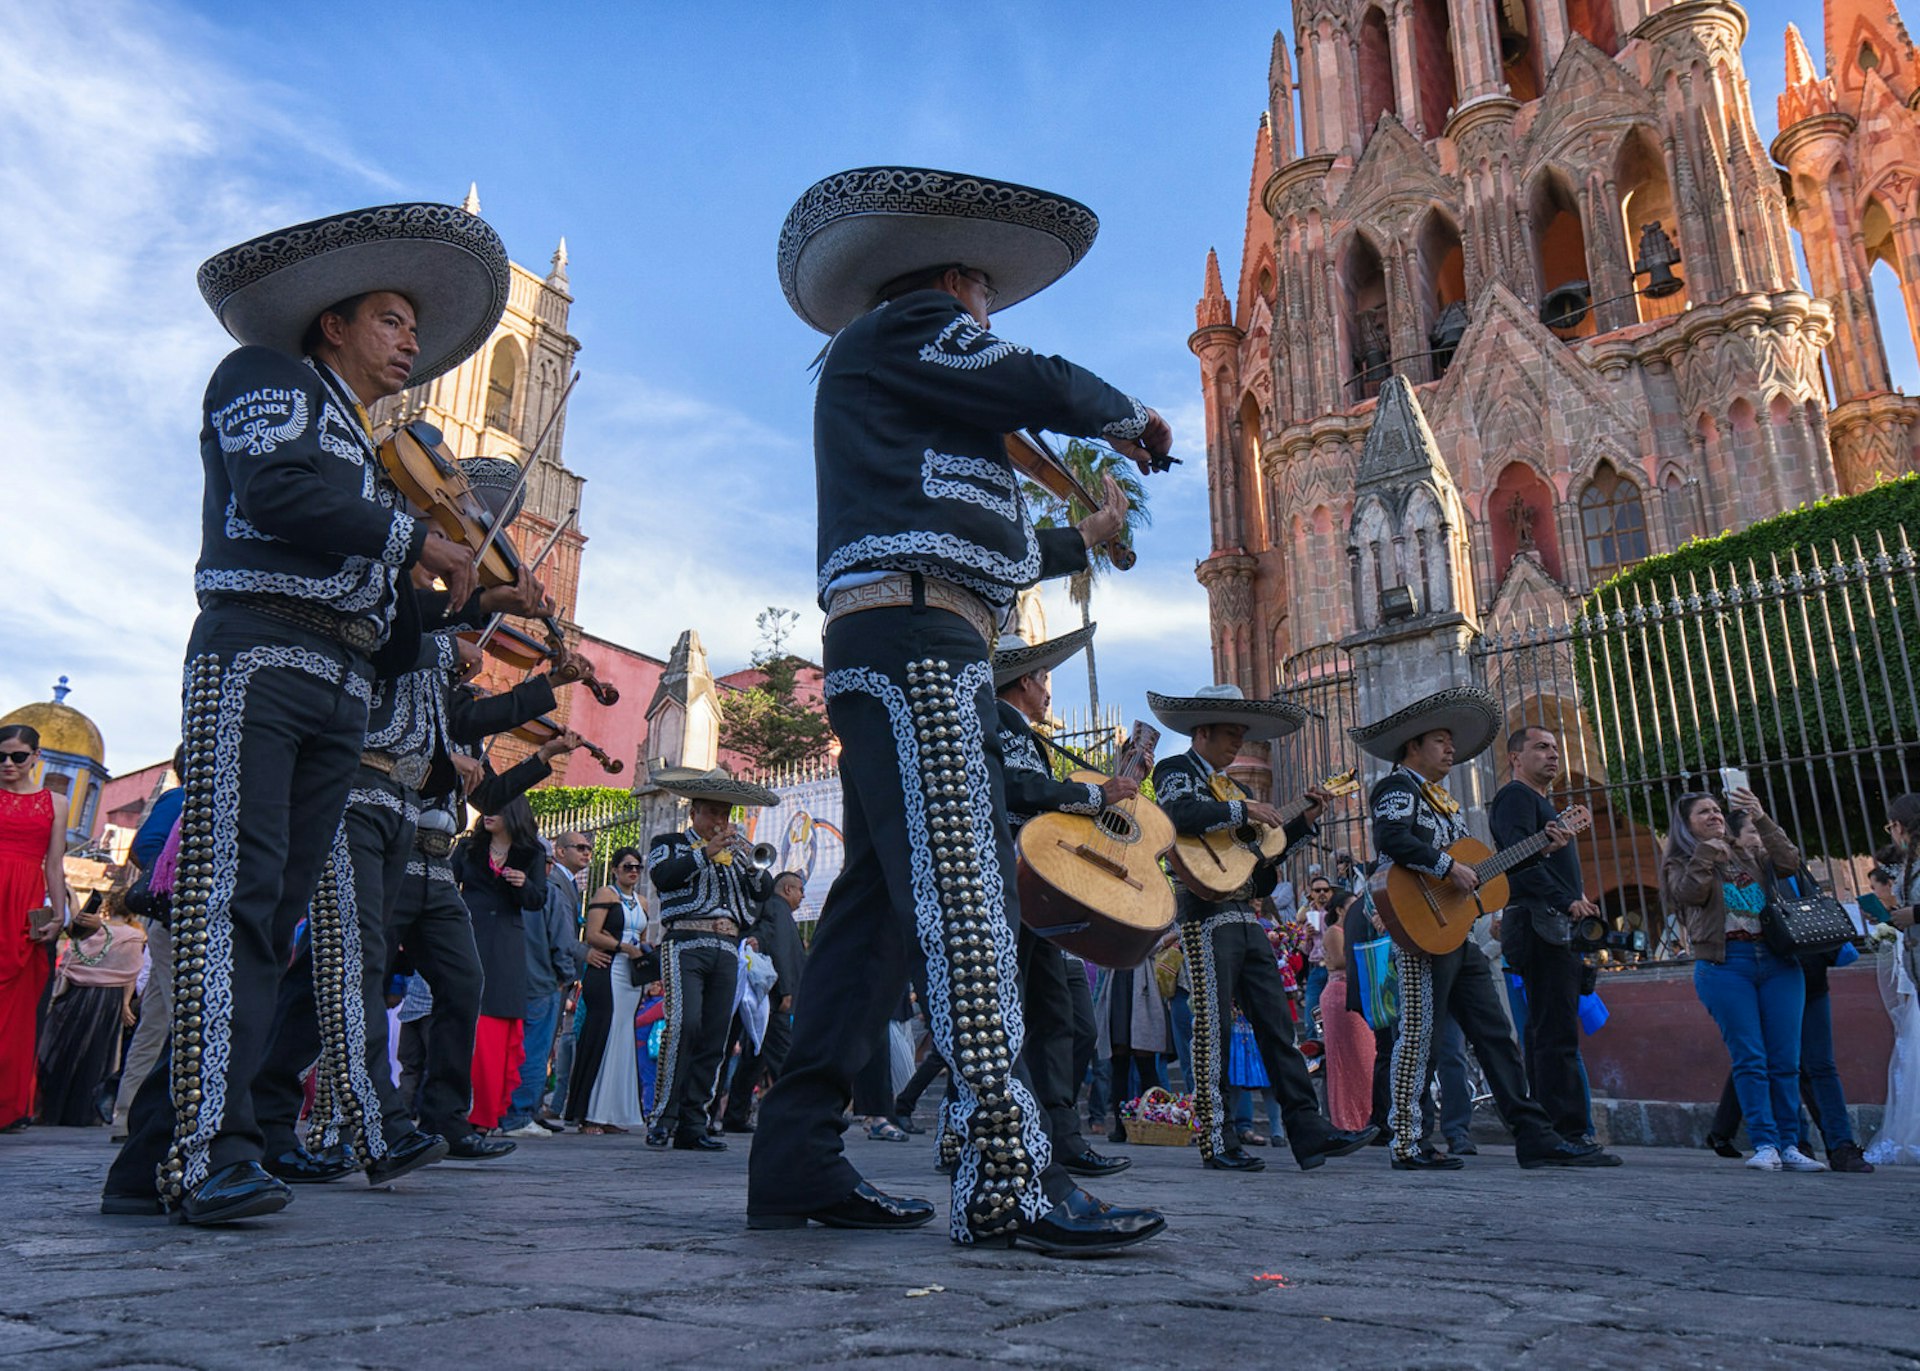 A mariachi band at a wedding in San Miguel de Allende's central square © Barna Tanko / Shutterstock